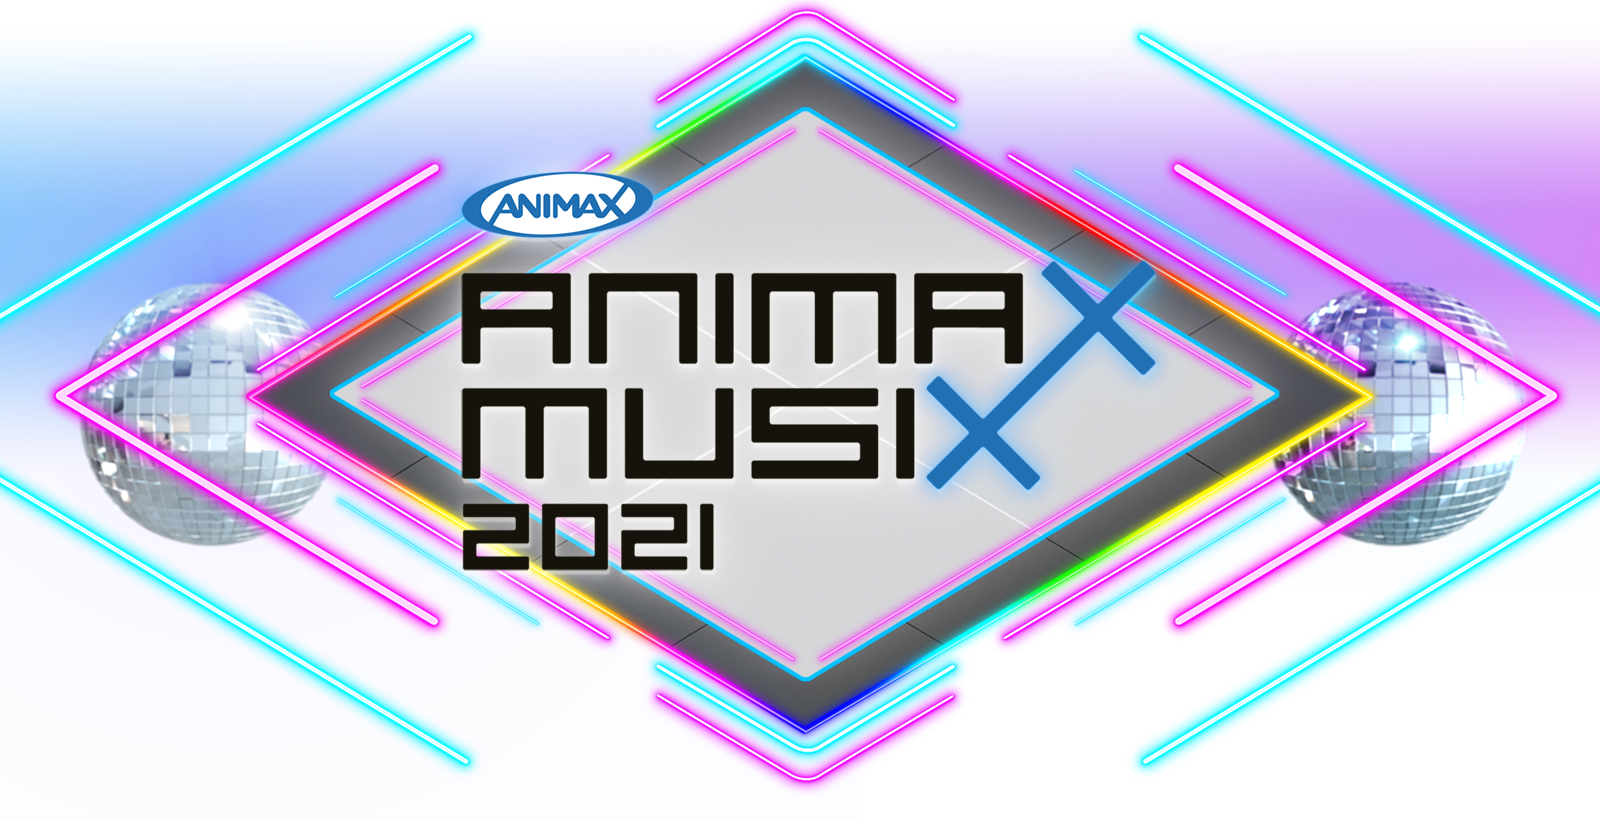 ANIMAX MUSIX 2021